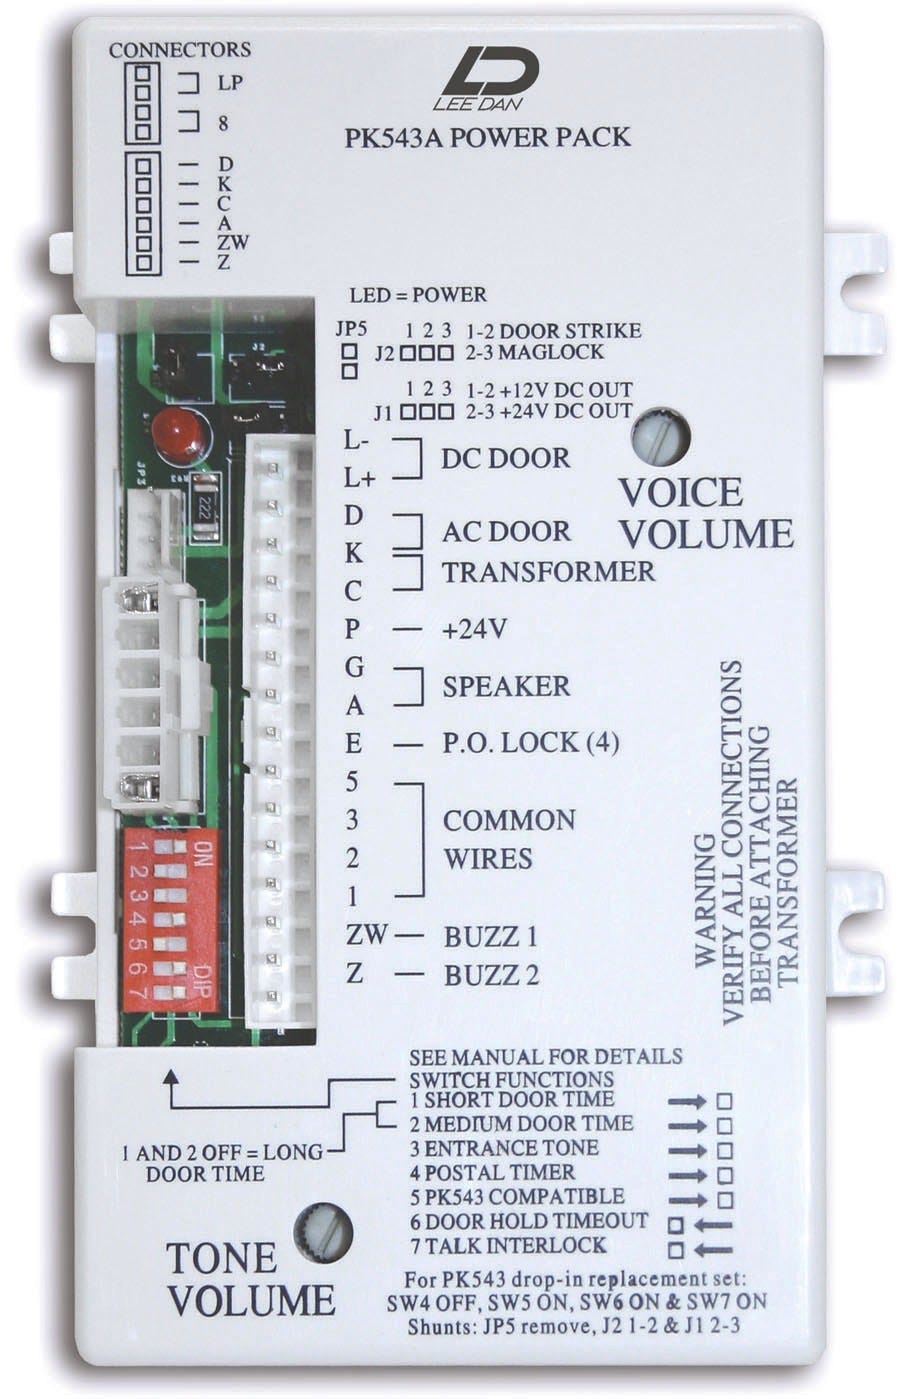 Intercom Buzzer wiring with Shelly Plus 1